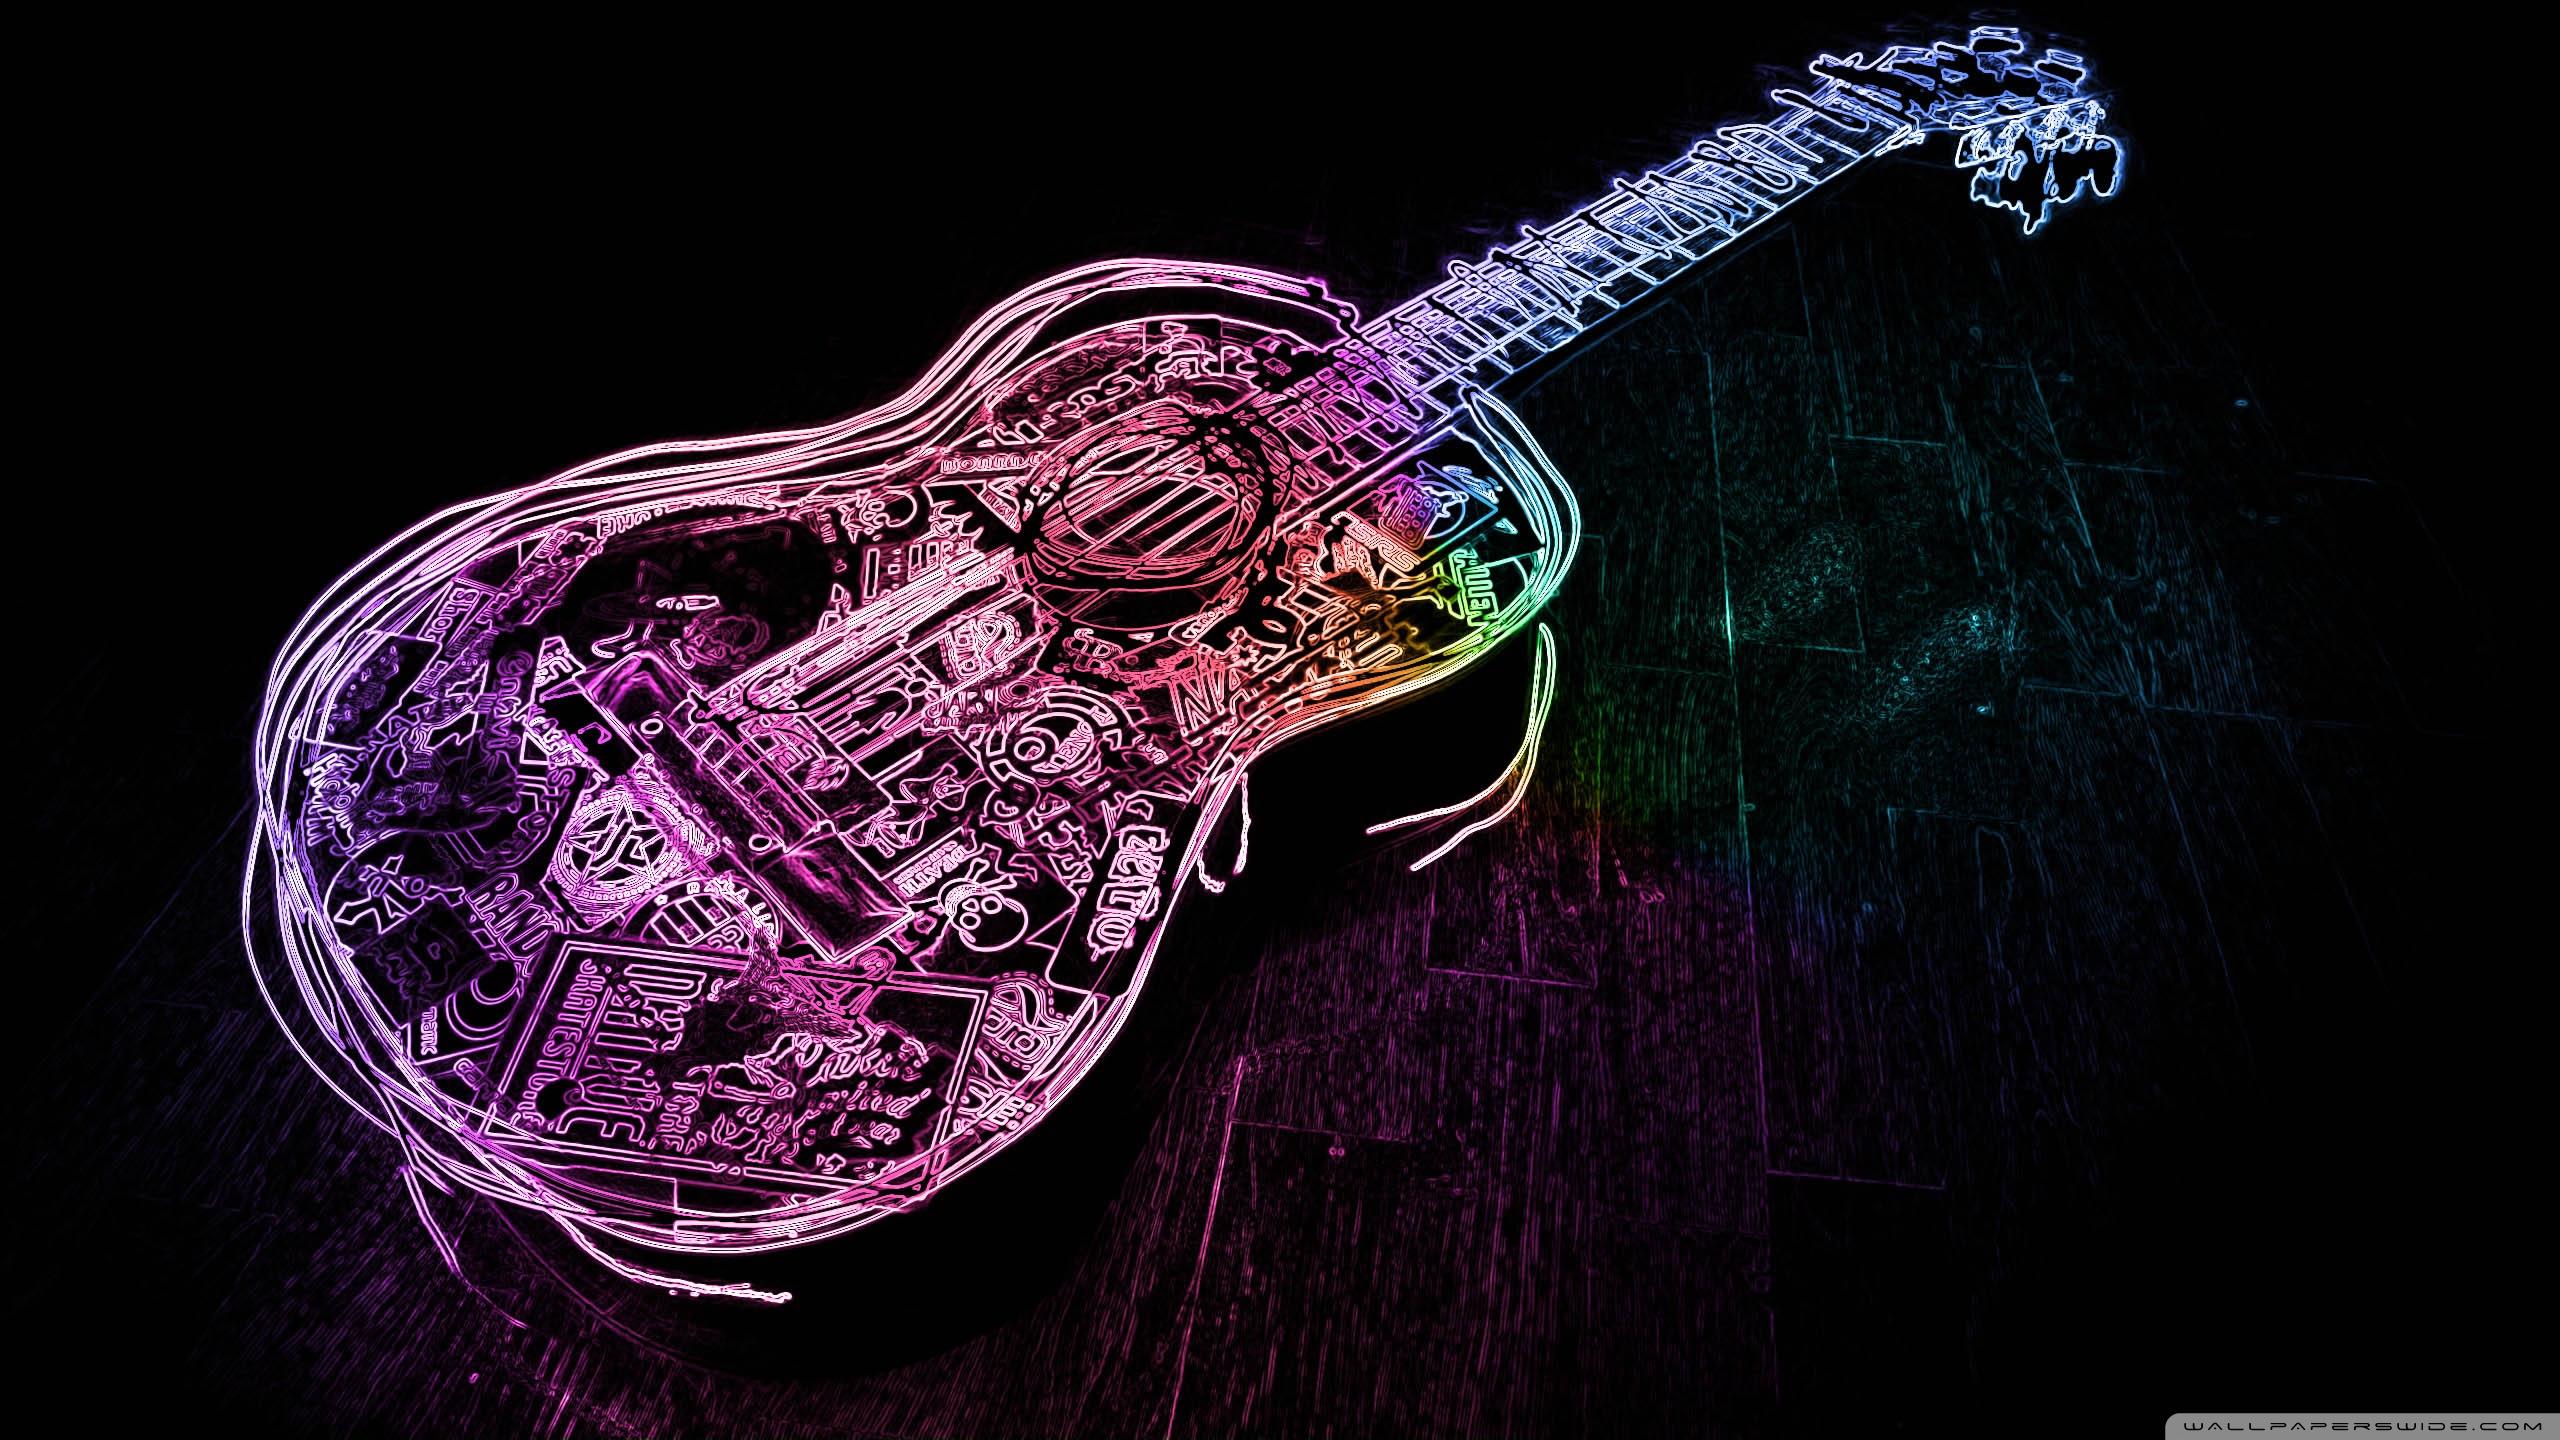 2560x1440 wallpaper guitar